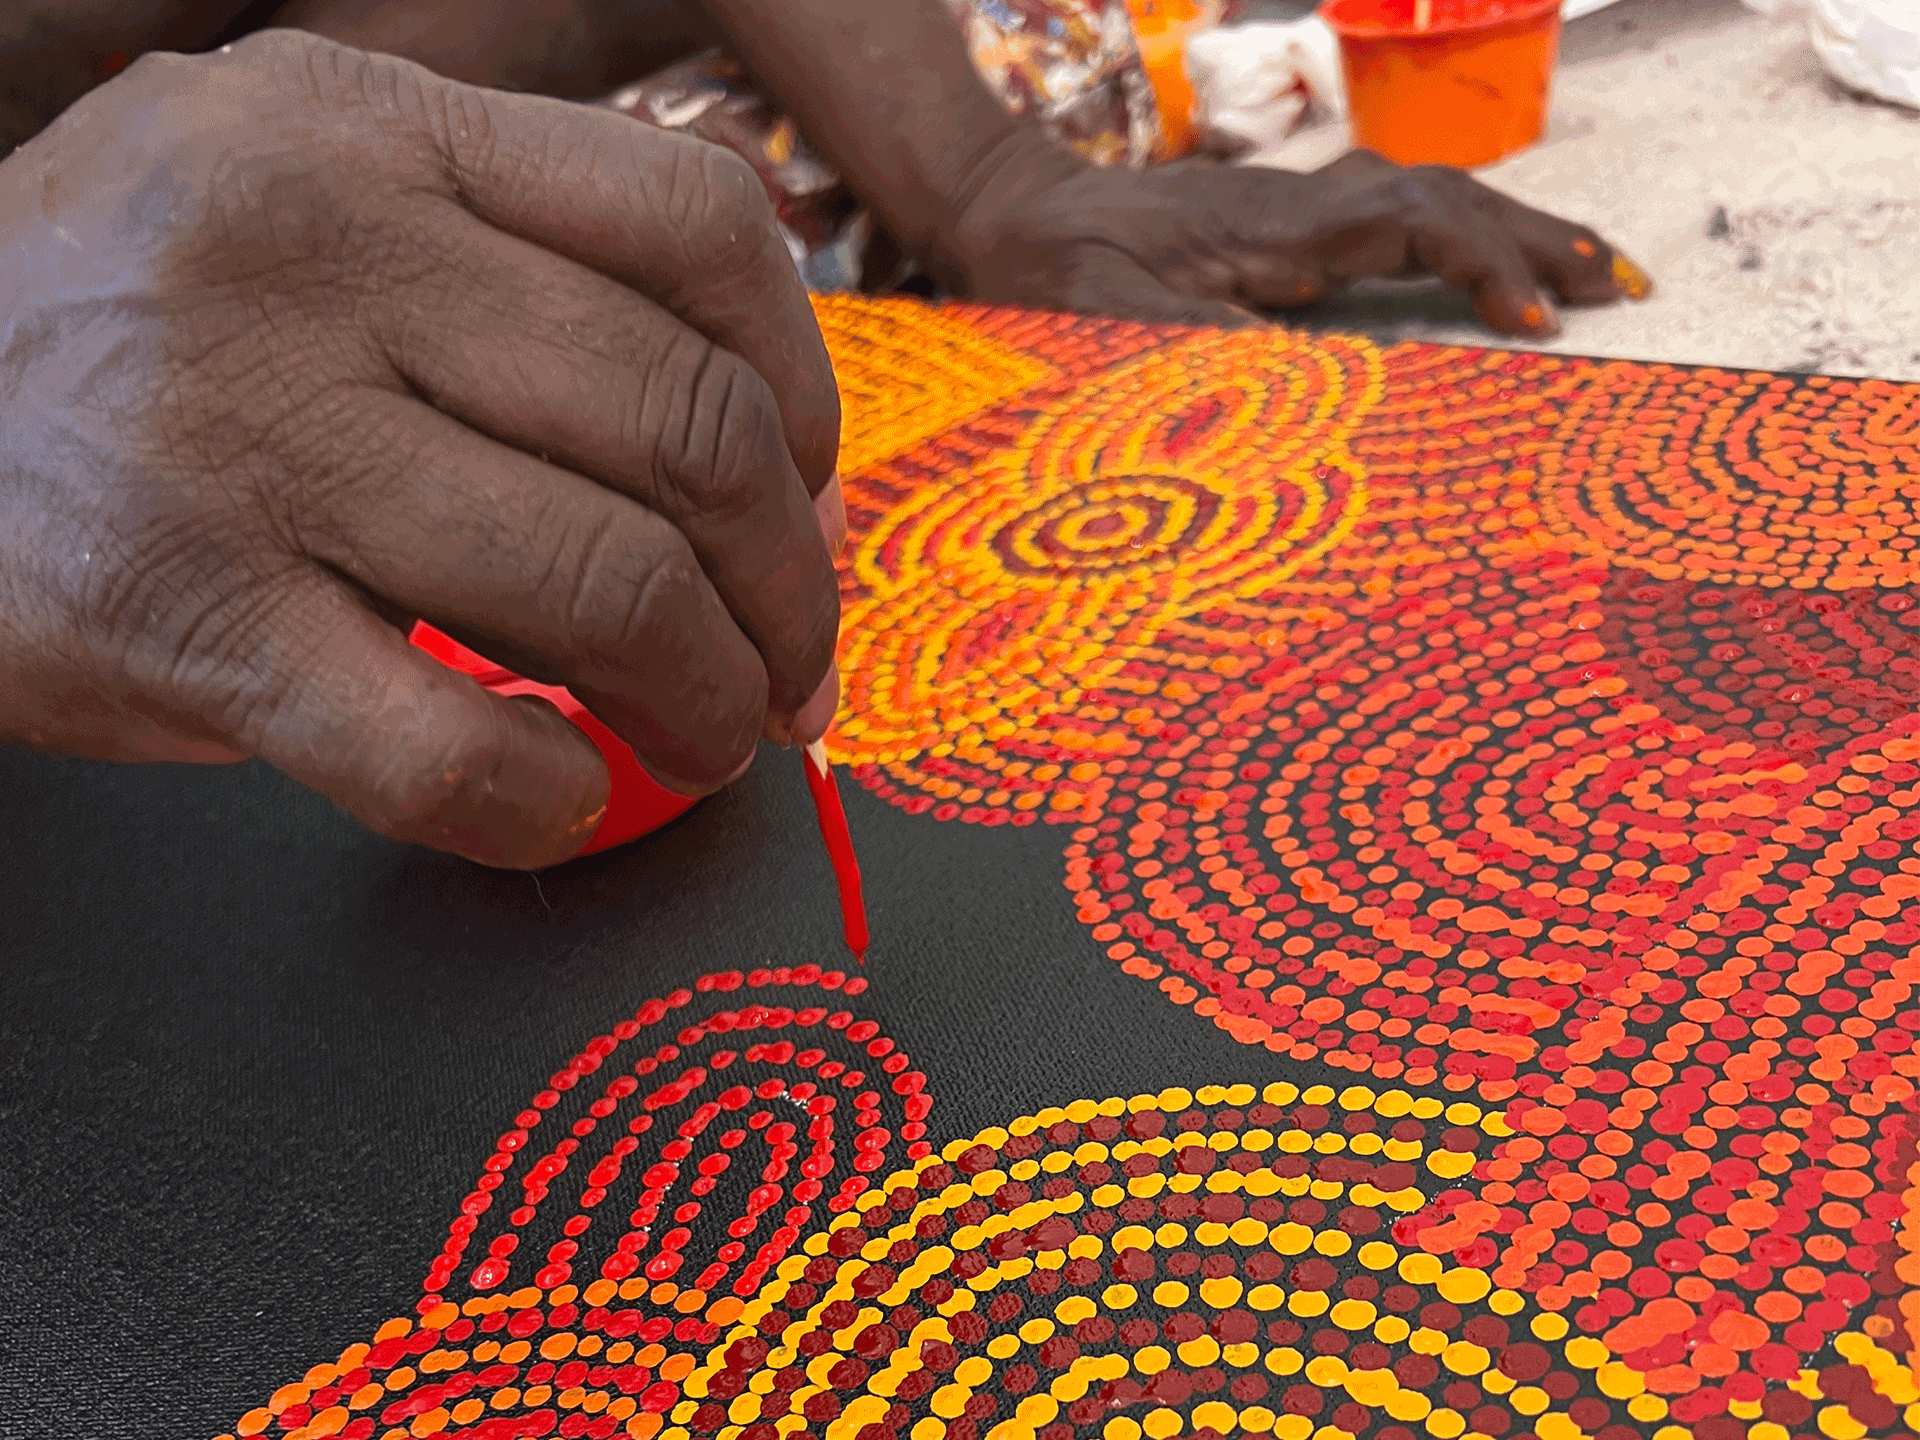 Indigenous experiences in Australia | Aboriginal Artwork in Alice Springs